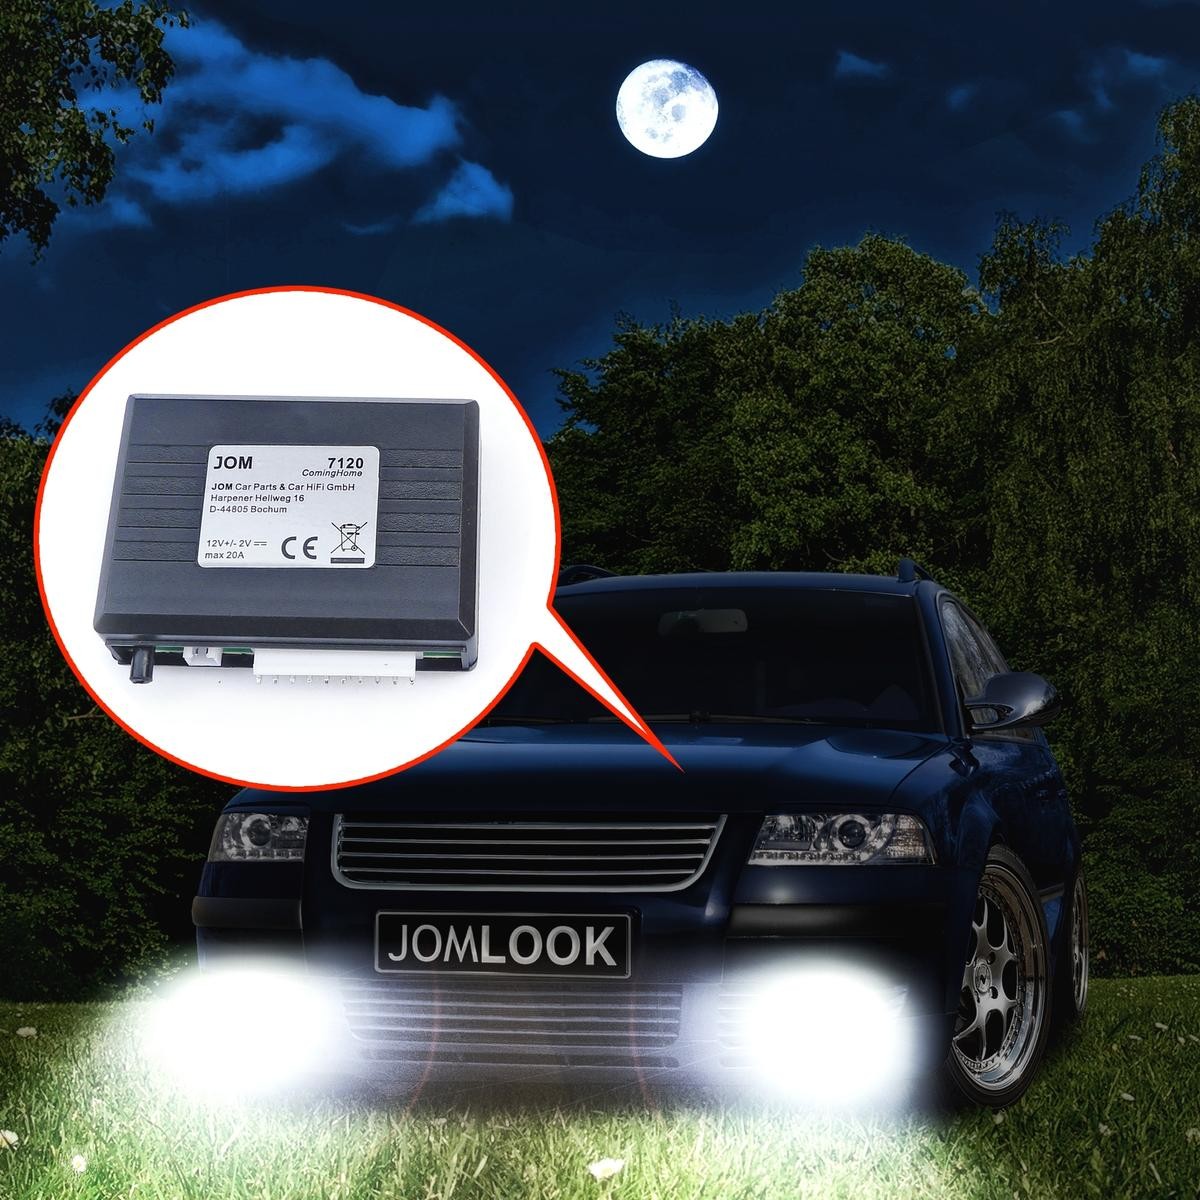 JOM 7120 Central locking system Audi A4 B5 Avant 1.9 TDI quattro 110 hp Diesel 2000 price